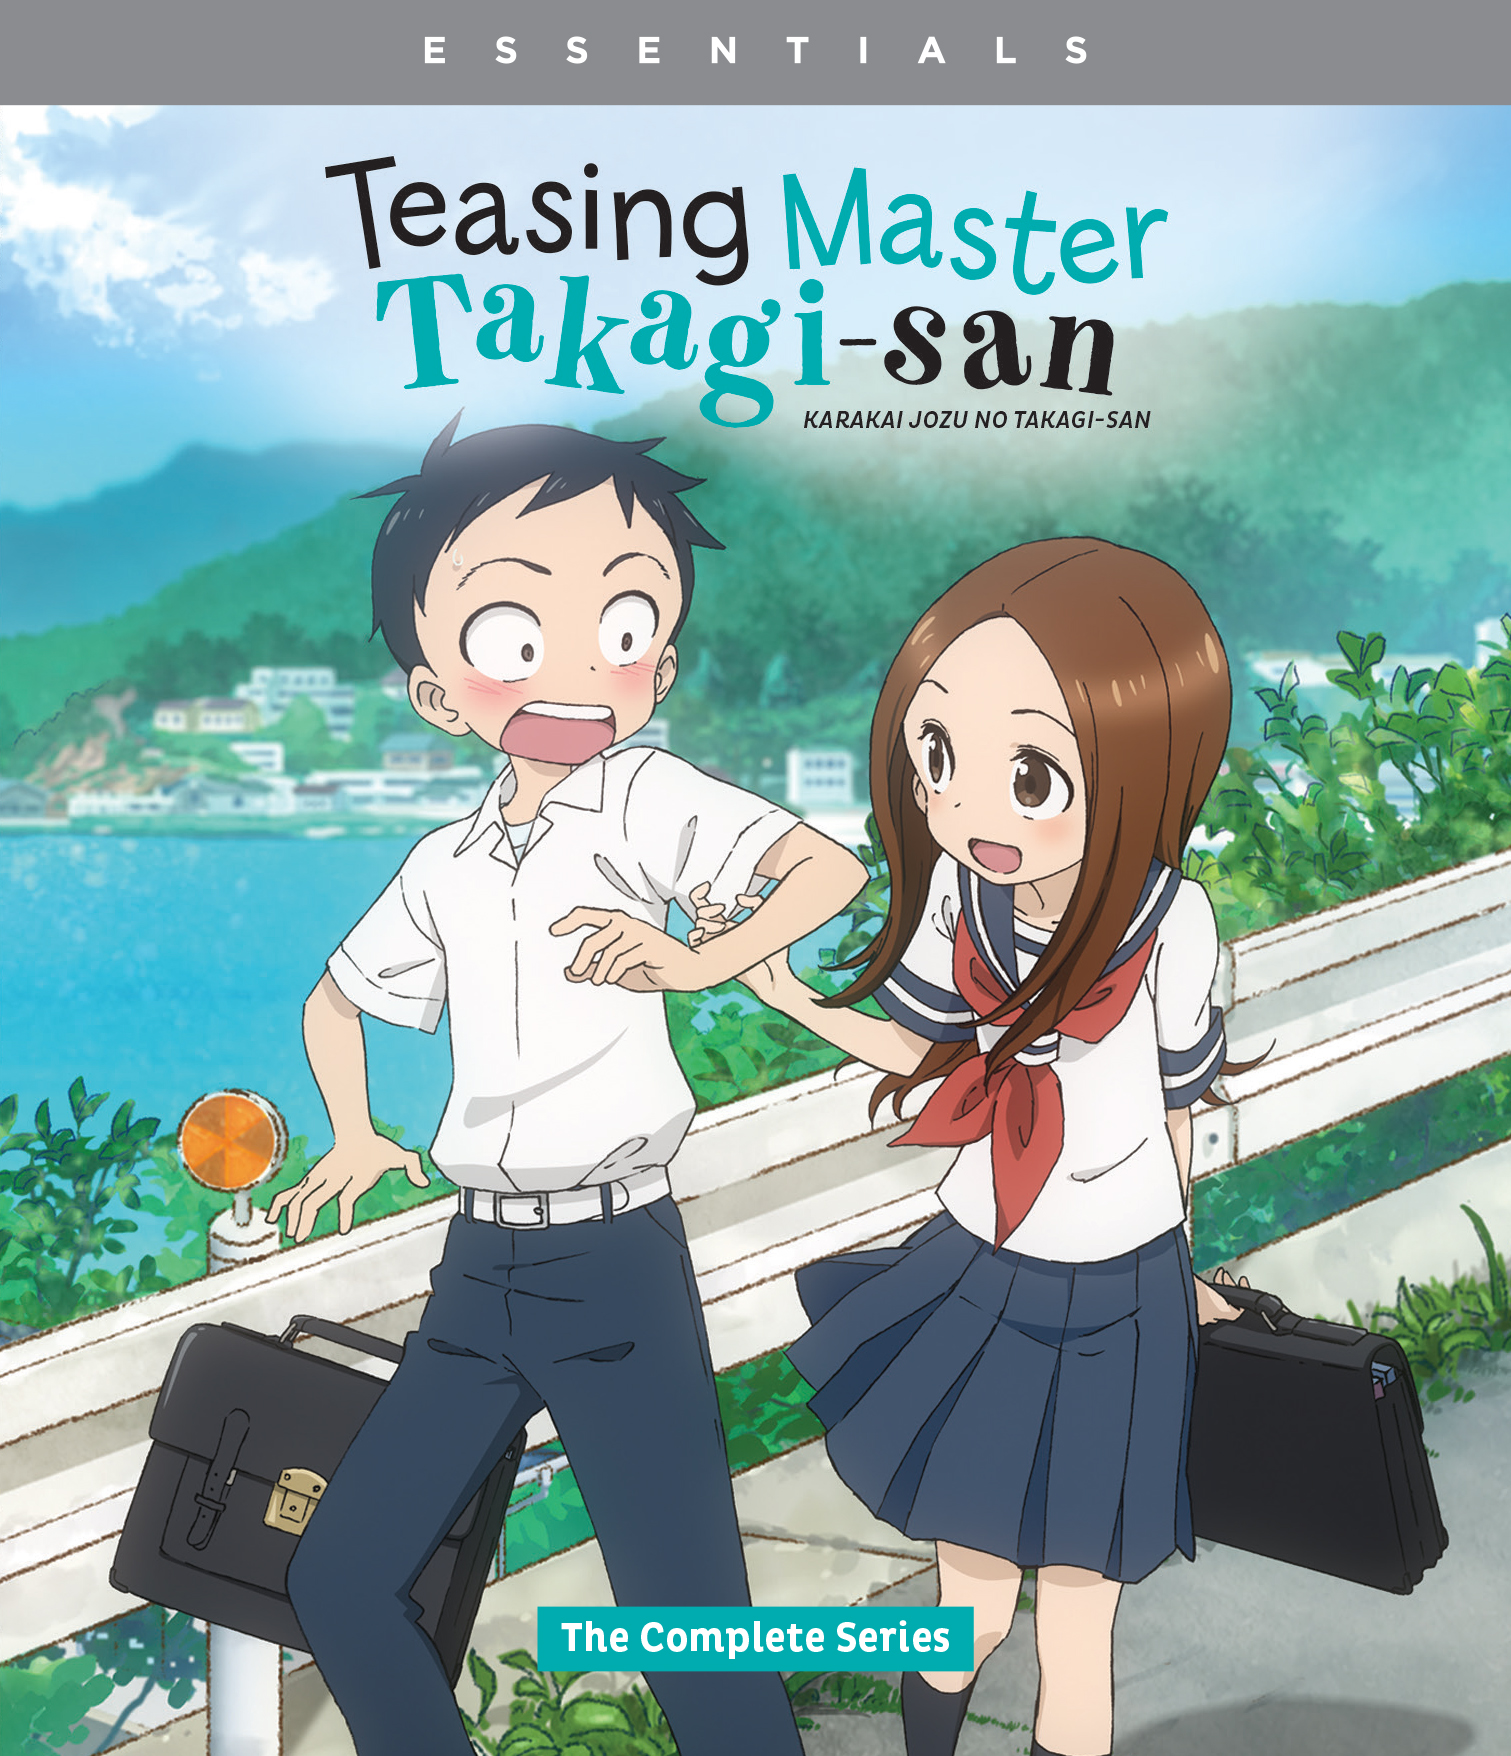 Teasing Master Takagi-san: The Movie 2022 [HD] 